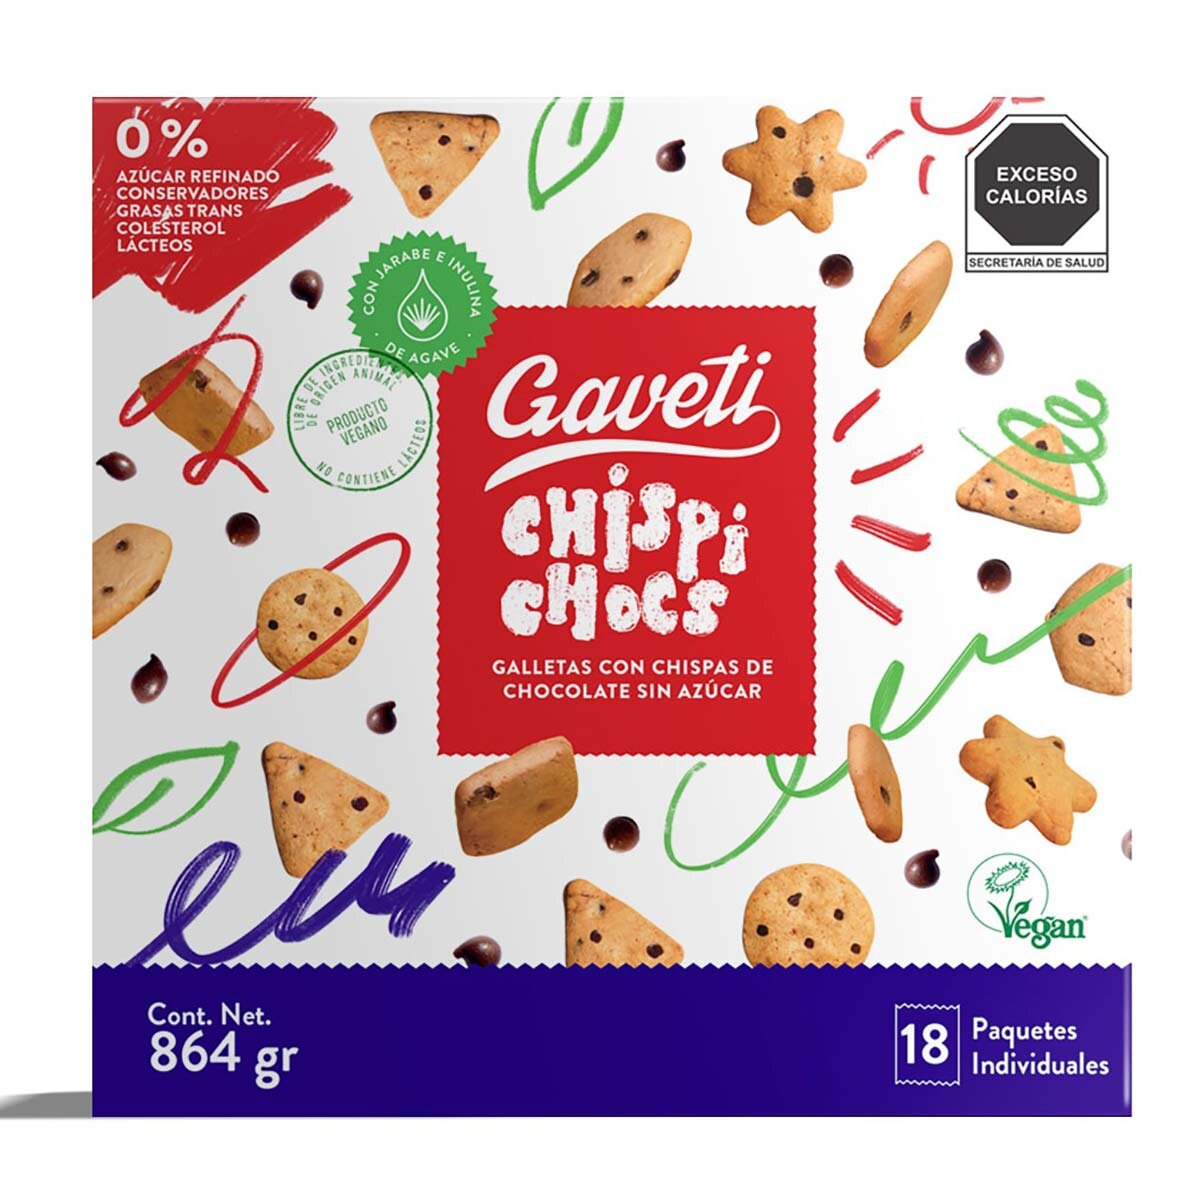 Gaveti Chispi Chocs Galletas con Chispas de Chocolate Sin Azúcar 18 pzas de 48 g